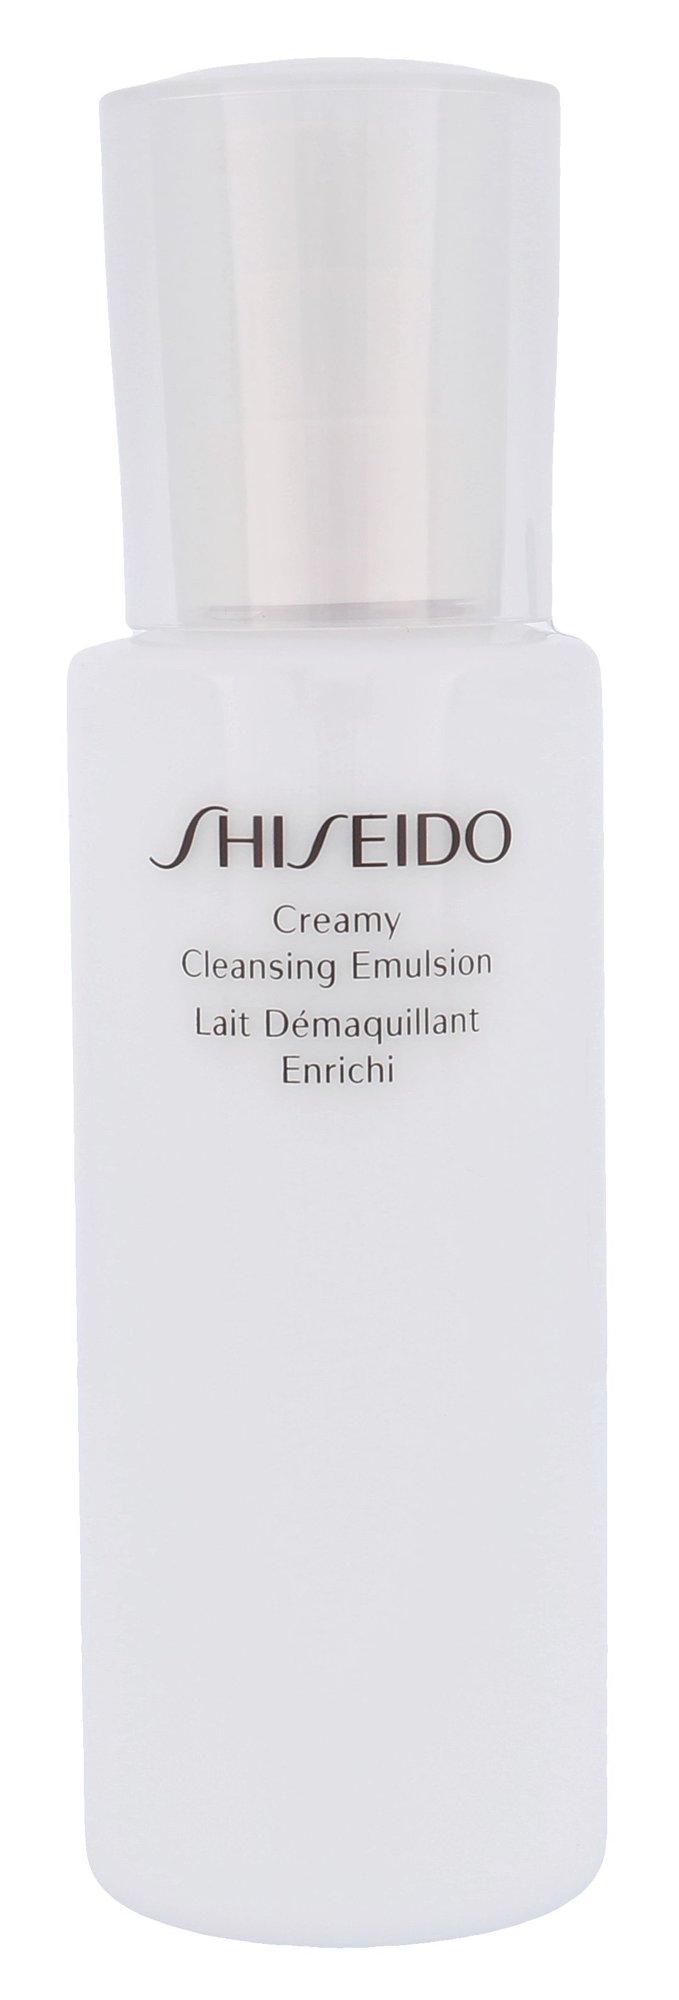 Shiseido Creamy Cleansing Emulsion veido emulsija